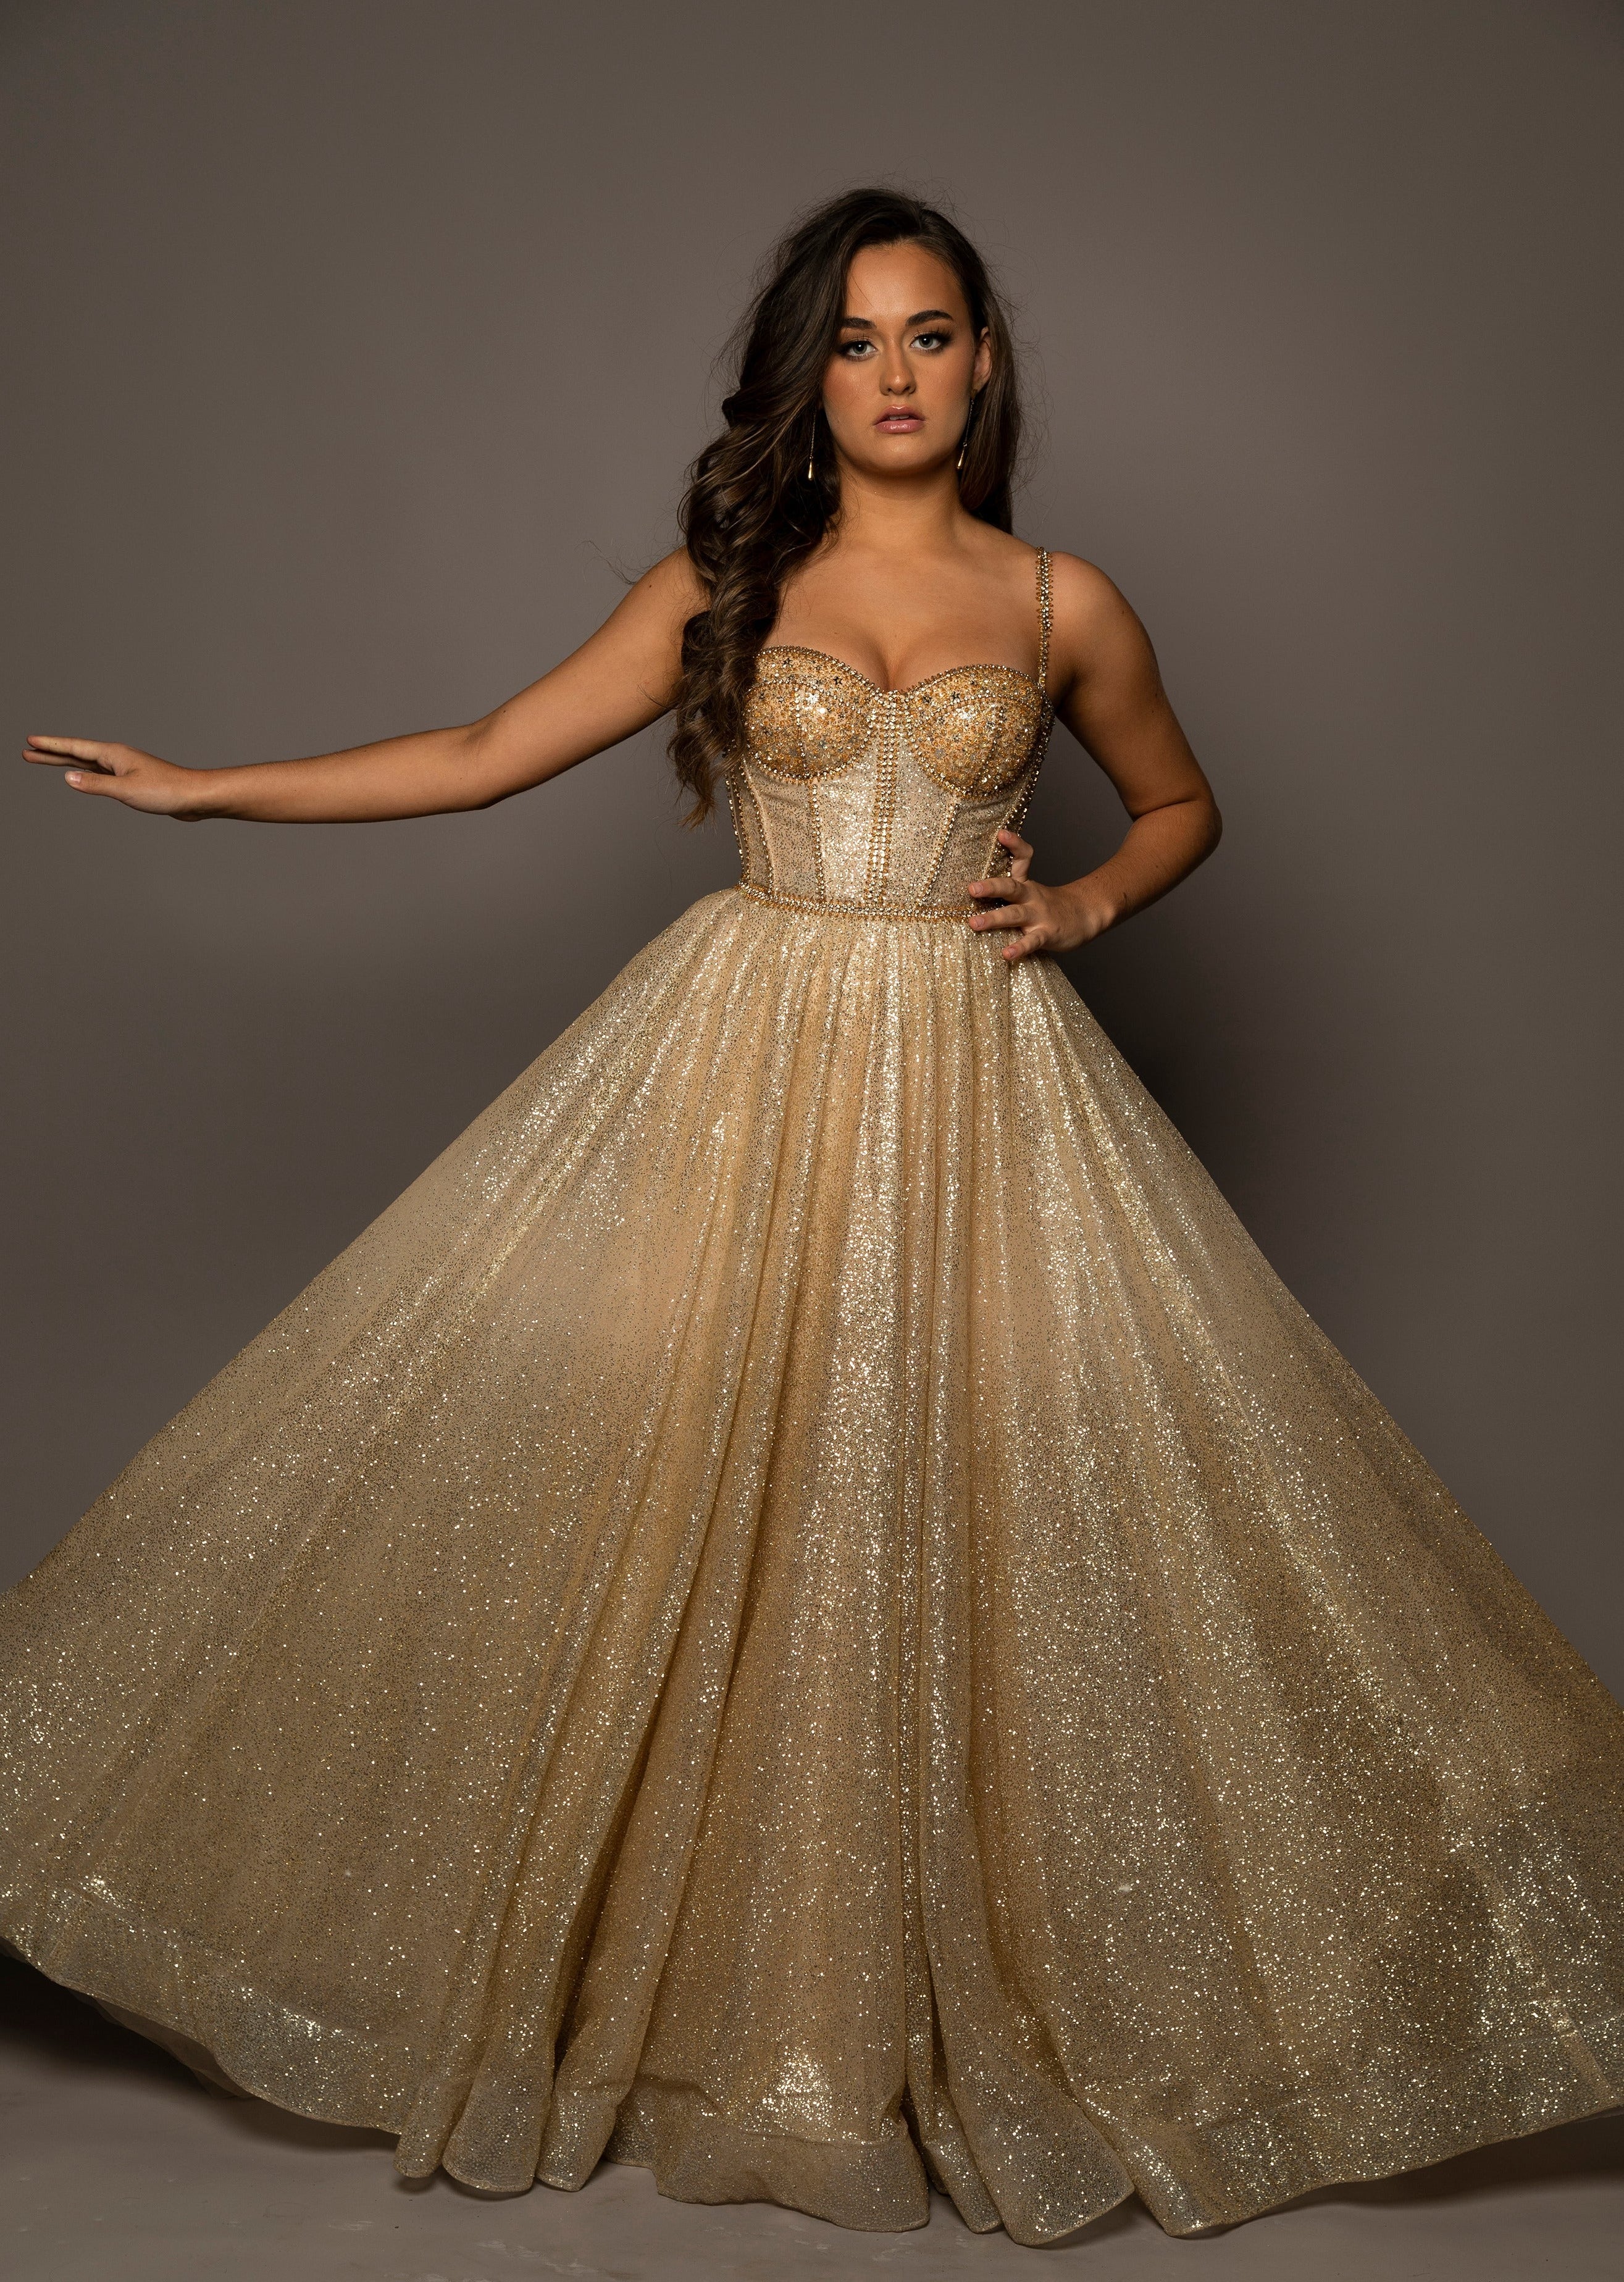 Sparkling gold bustier cup dress – Destiny Chic